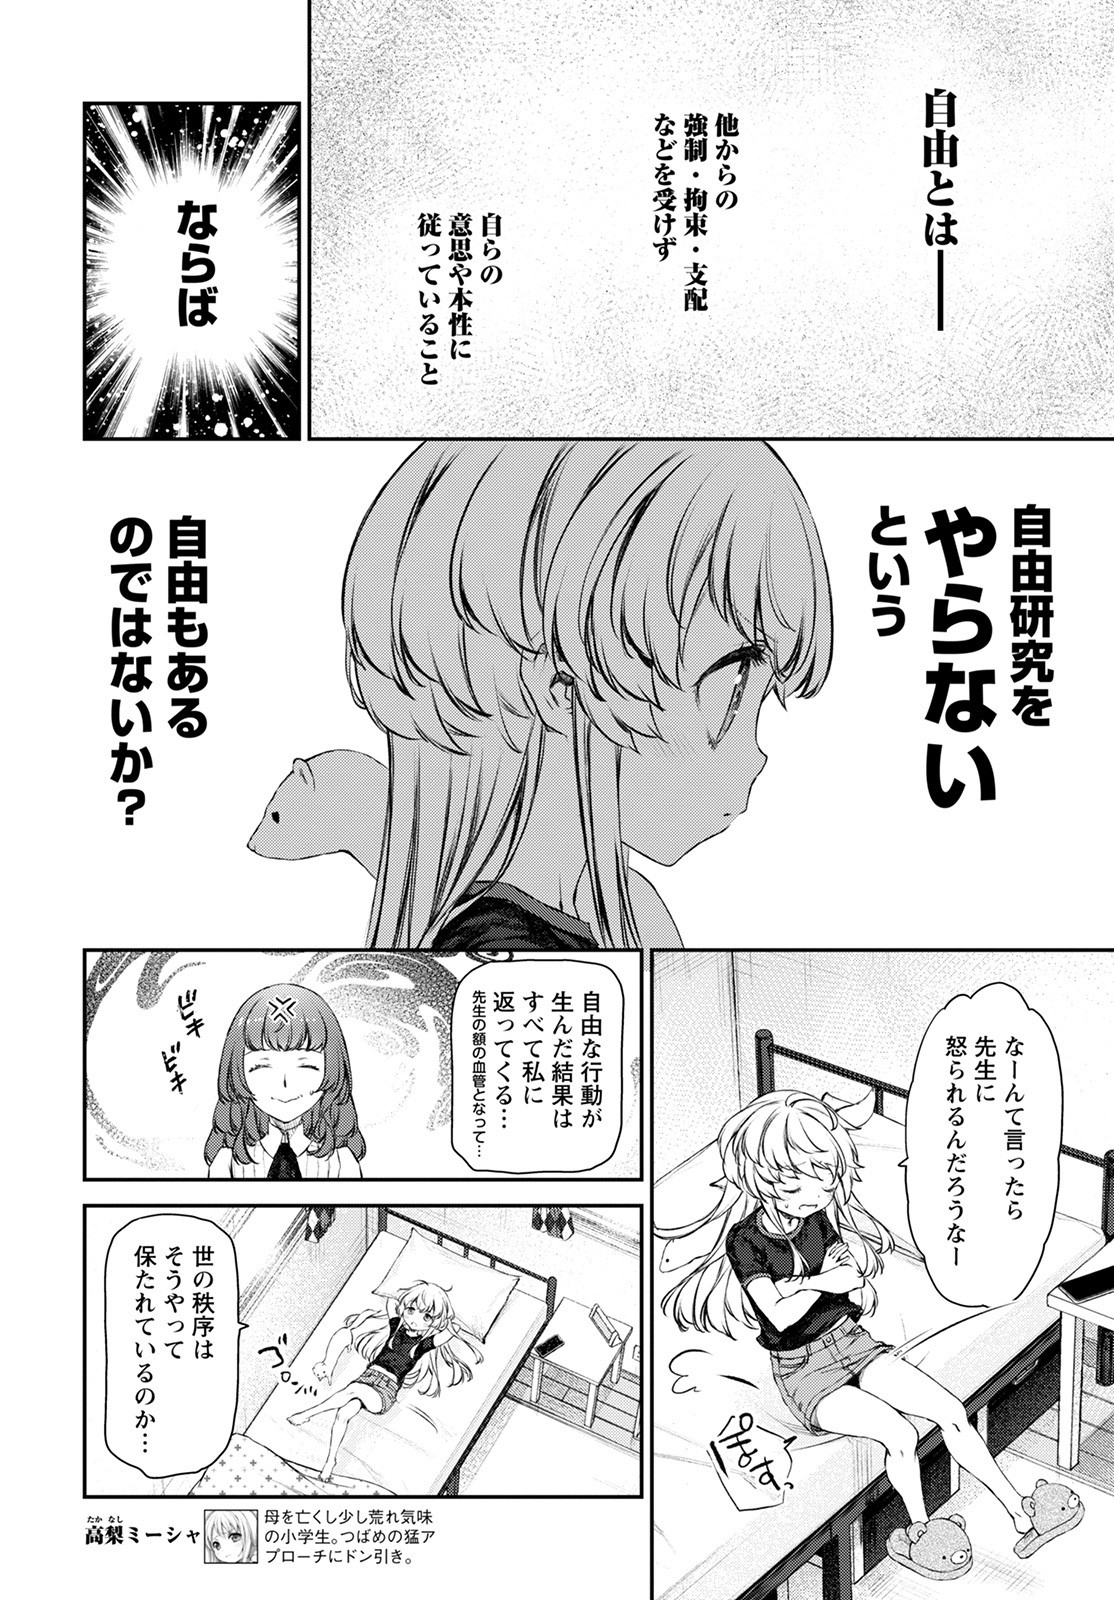 Uchi no Maid ga Uzasugiru! - Chapter 52 - Page 2